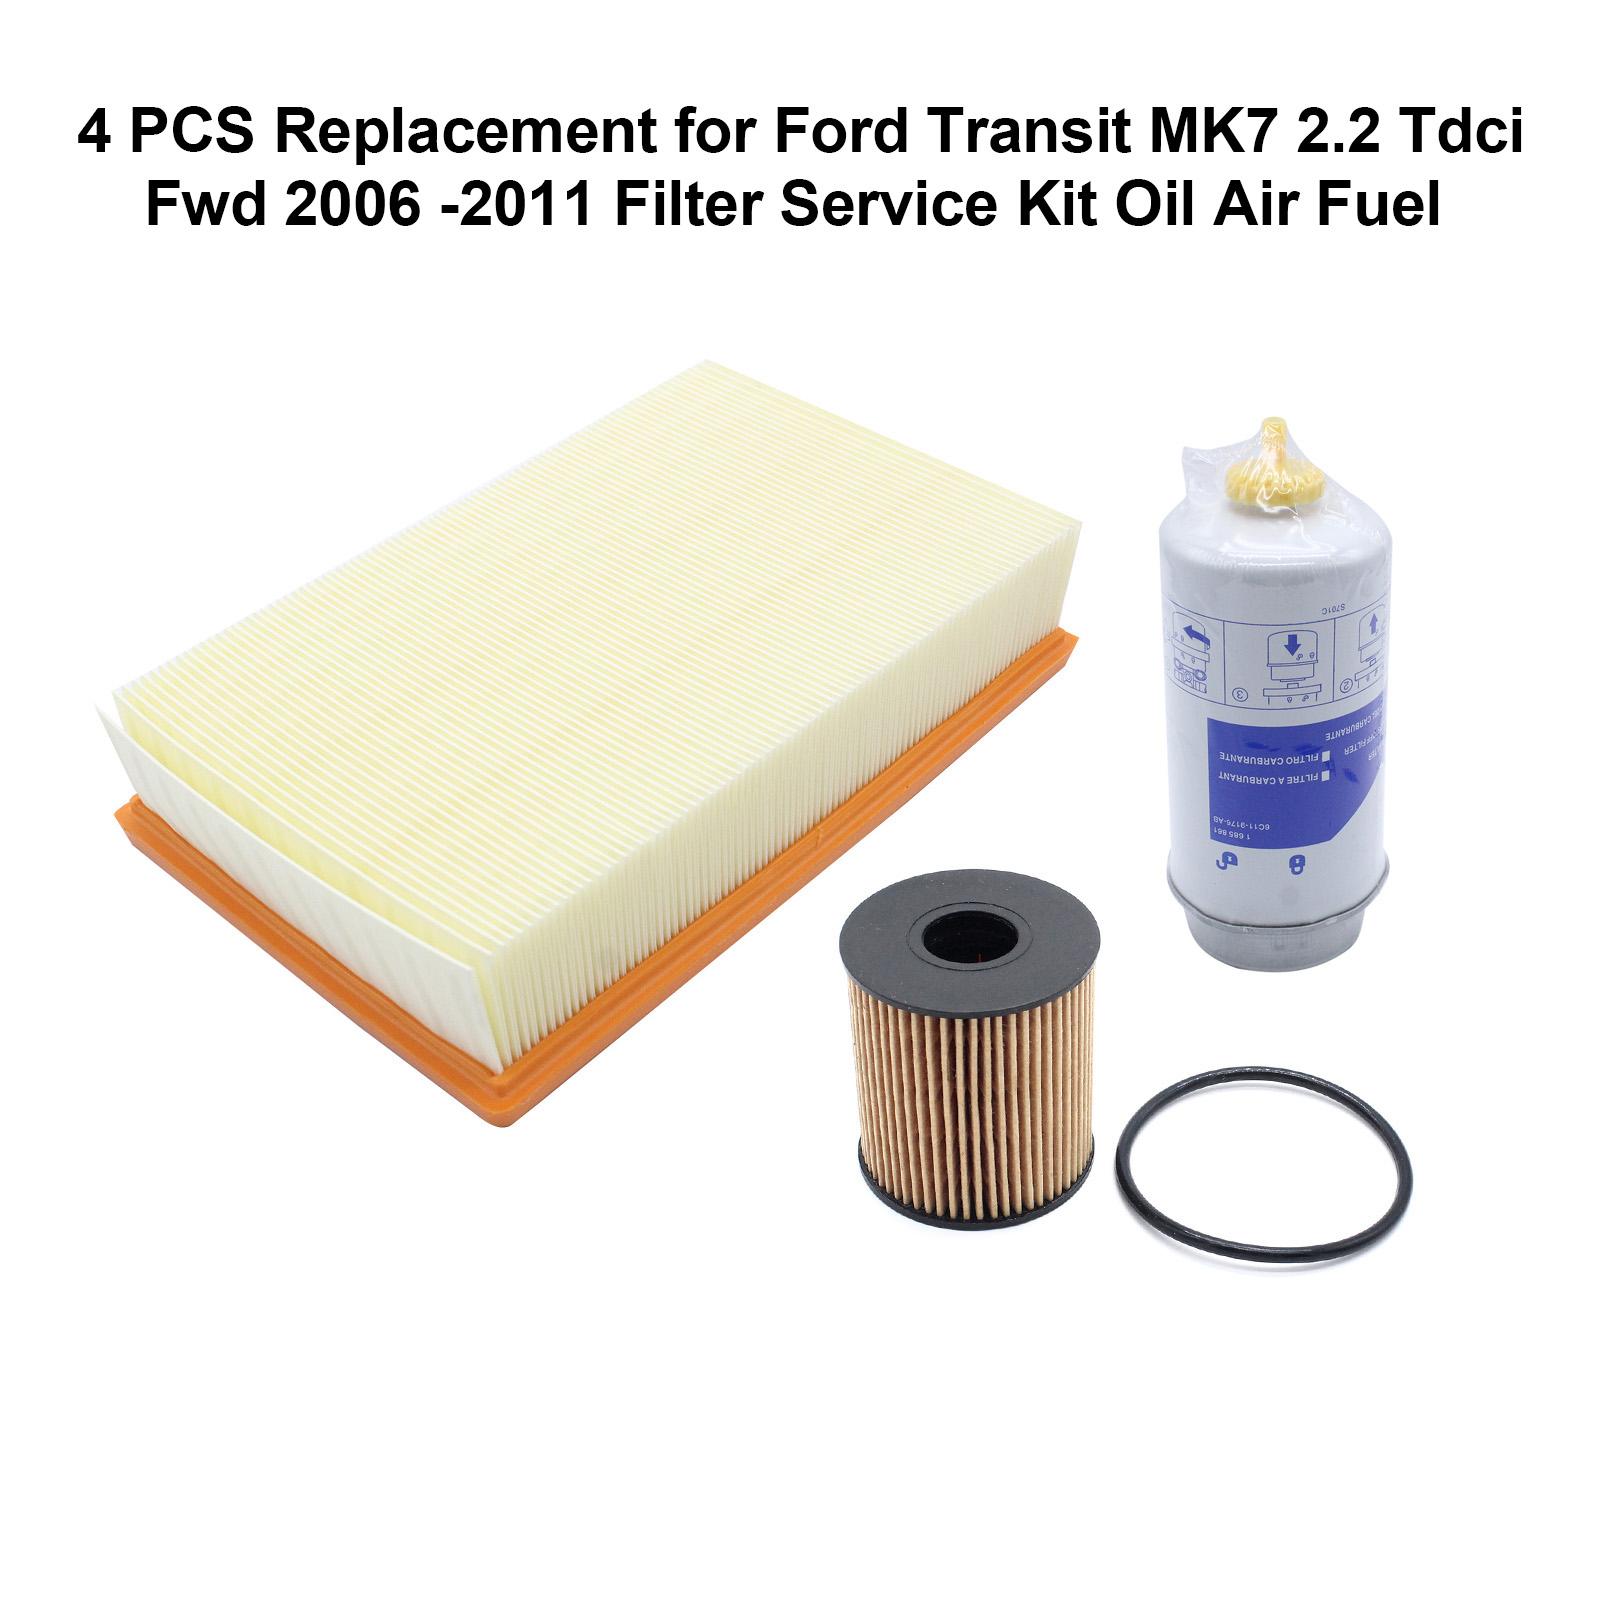 Hình ảnh 4 PCS Filter Service Kit Oil Air Fuel Replacement for Ford Transit MK7 2.2 Tdci Fwd 2006 -2011